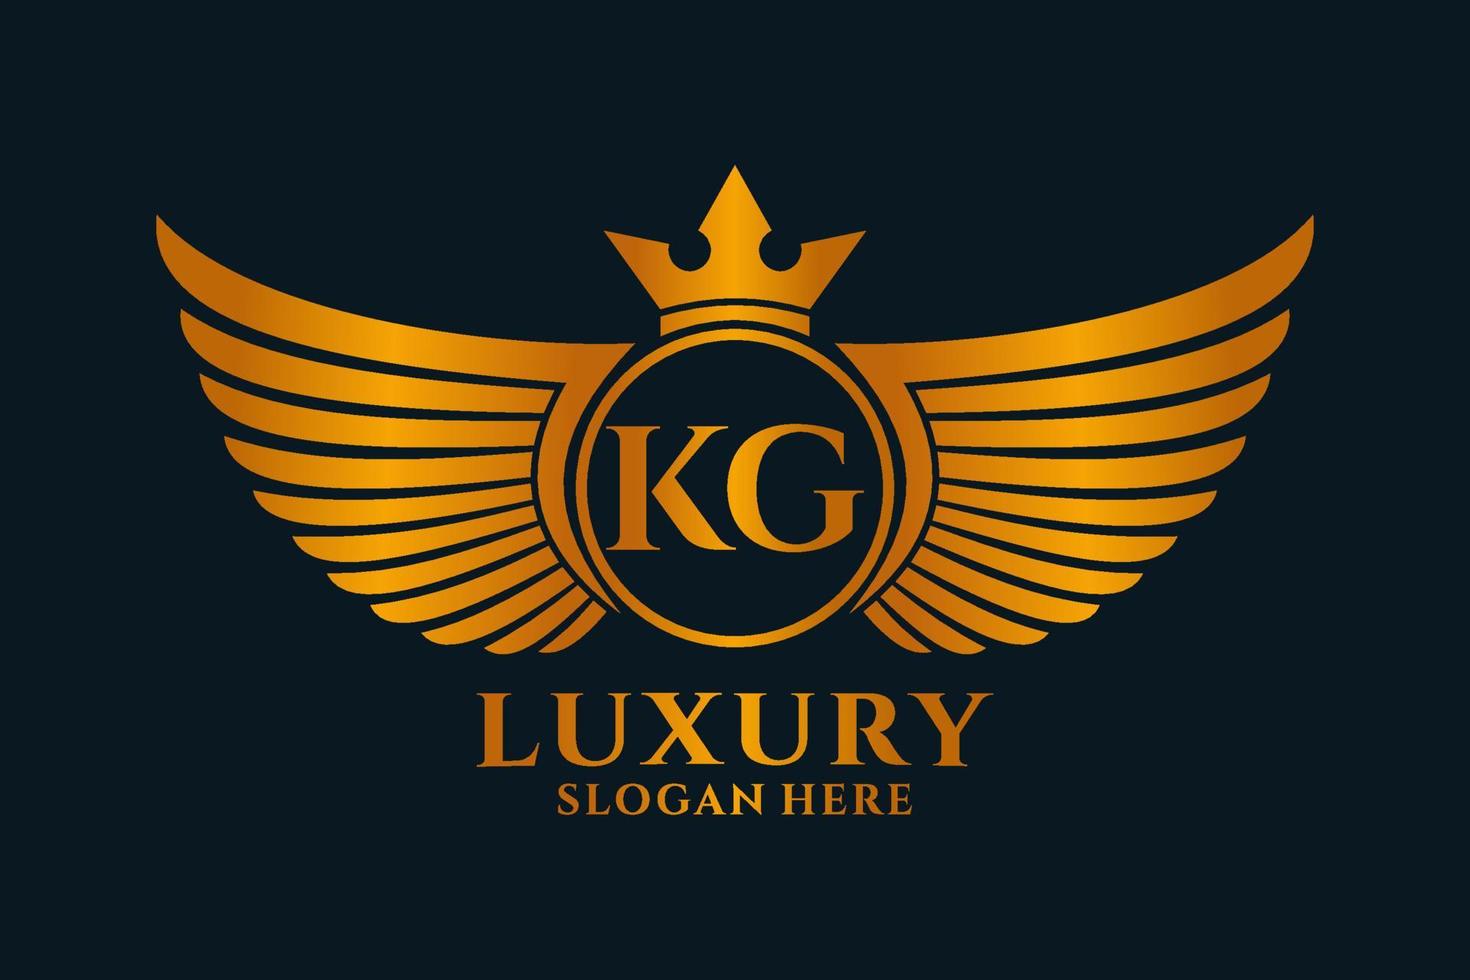 luxe Koninklijk vleugel brief kg kam goud kleur logo vector, zege logo, kam logo, vleugel logo, vector logo sjabloon.